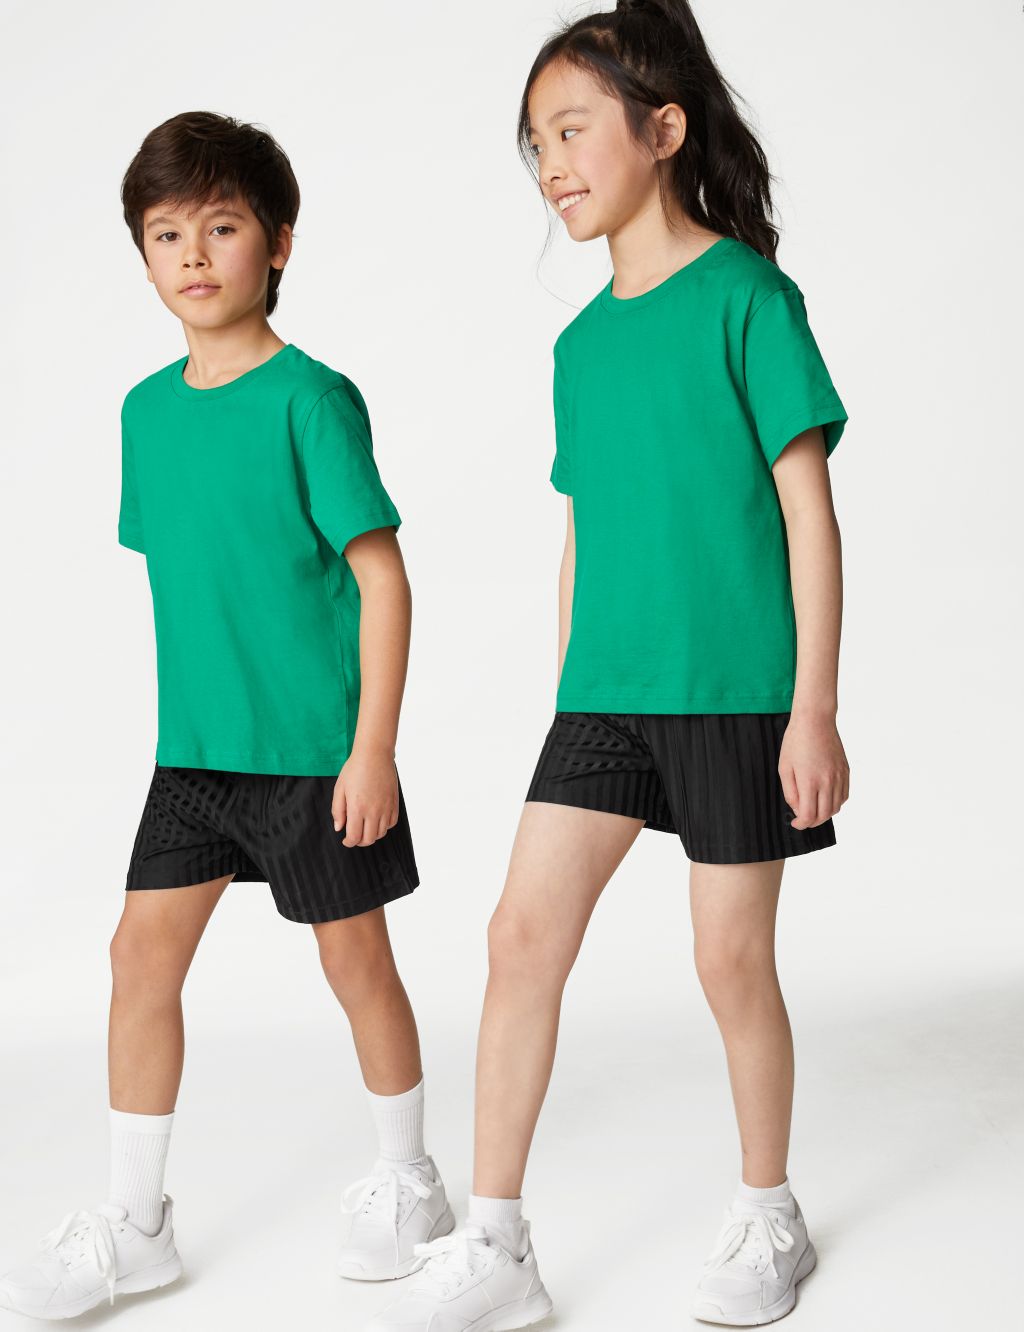 Unisex Sports School Shorts (2-16 Yrs) image 1